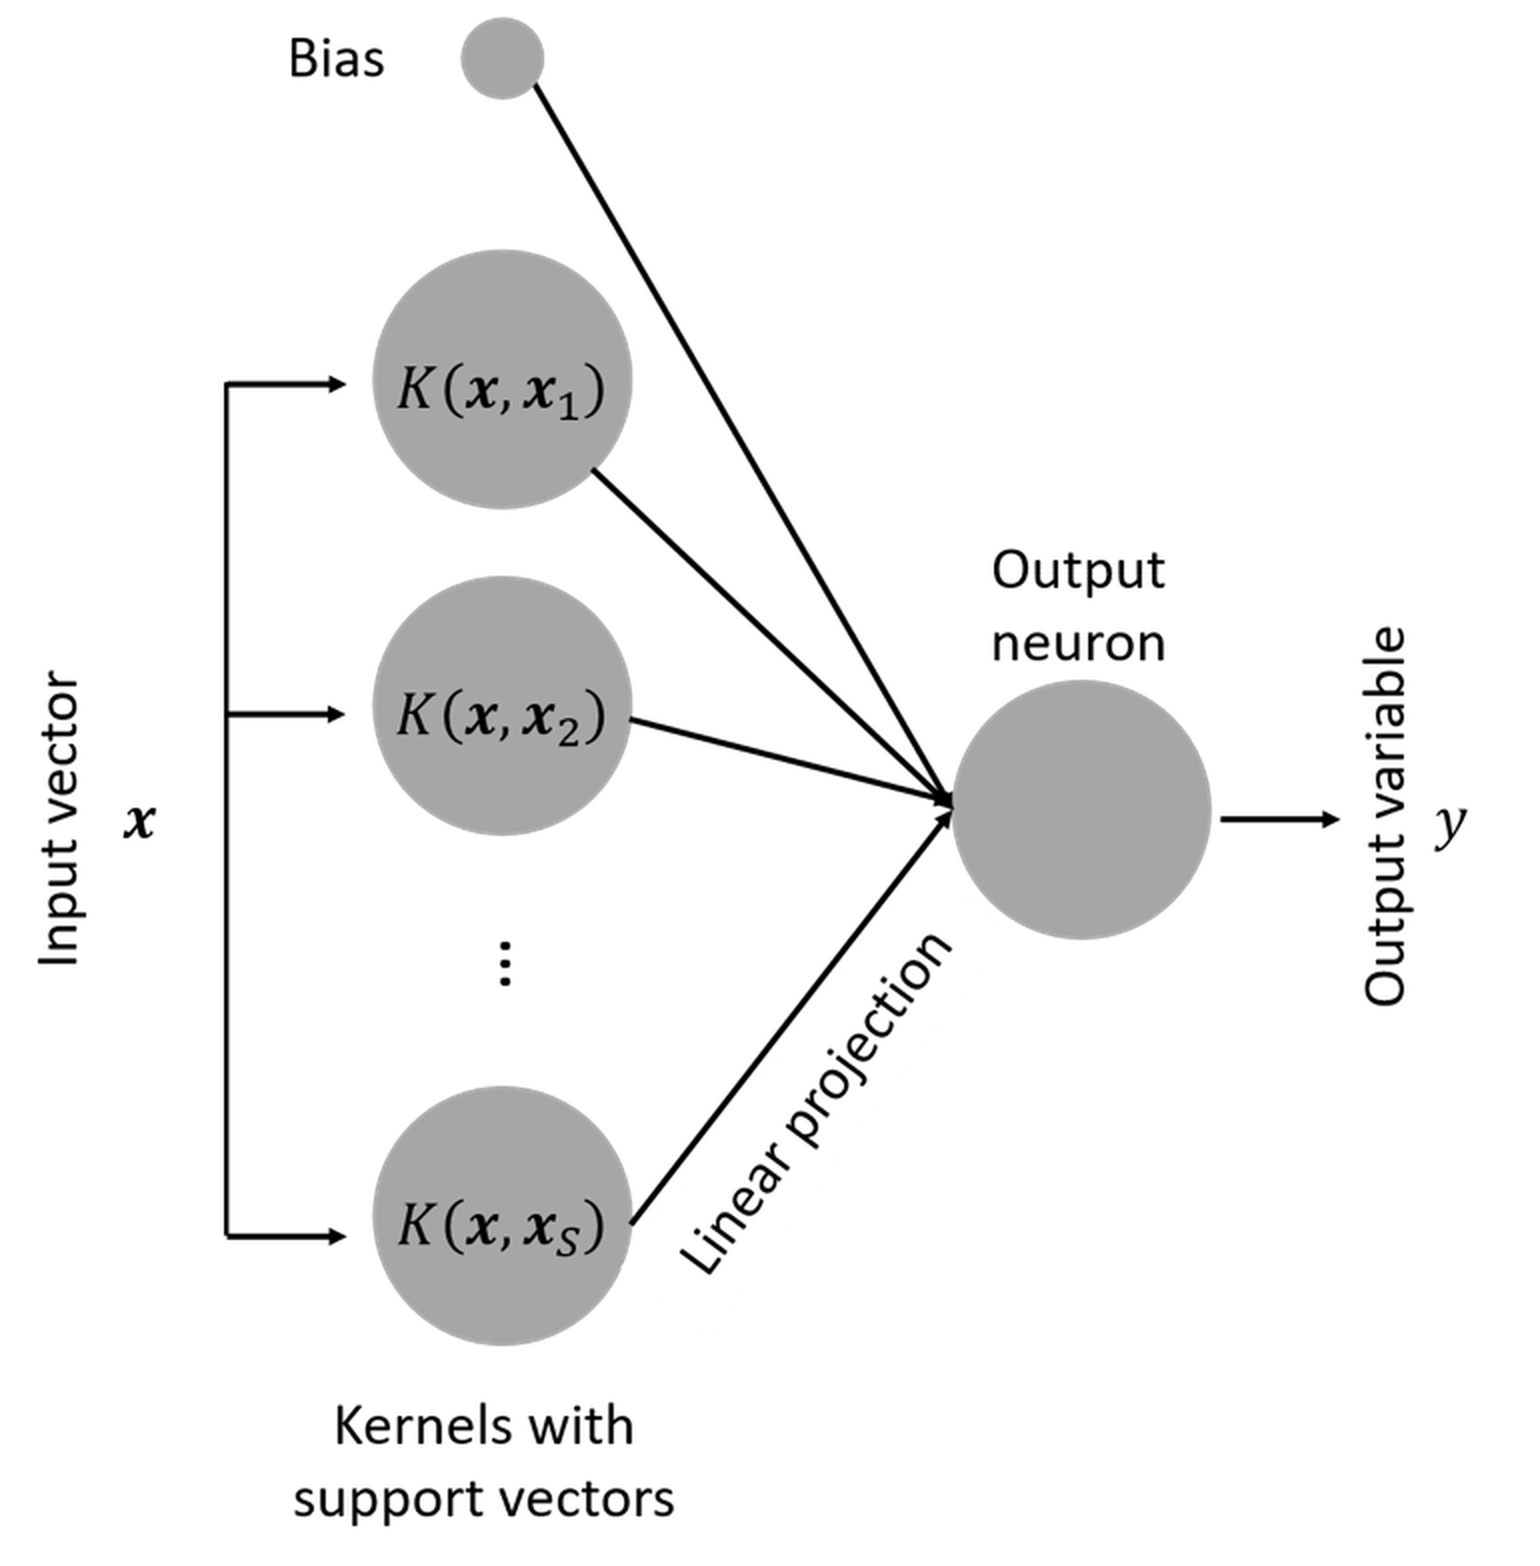 SVM as a neural network model 